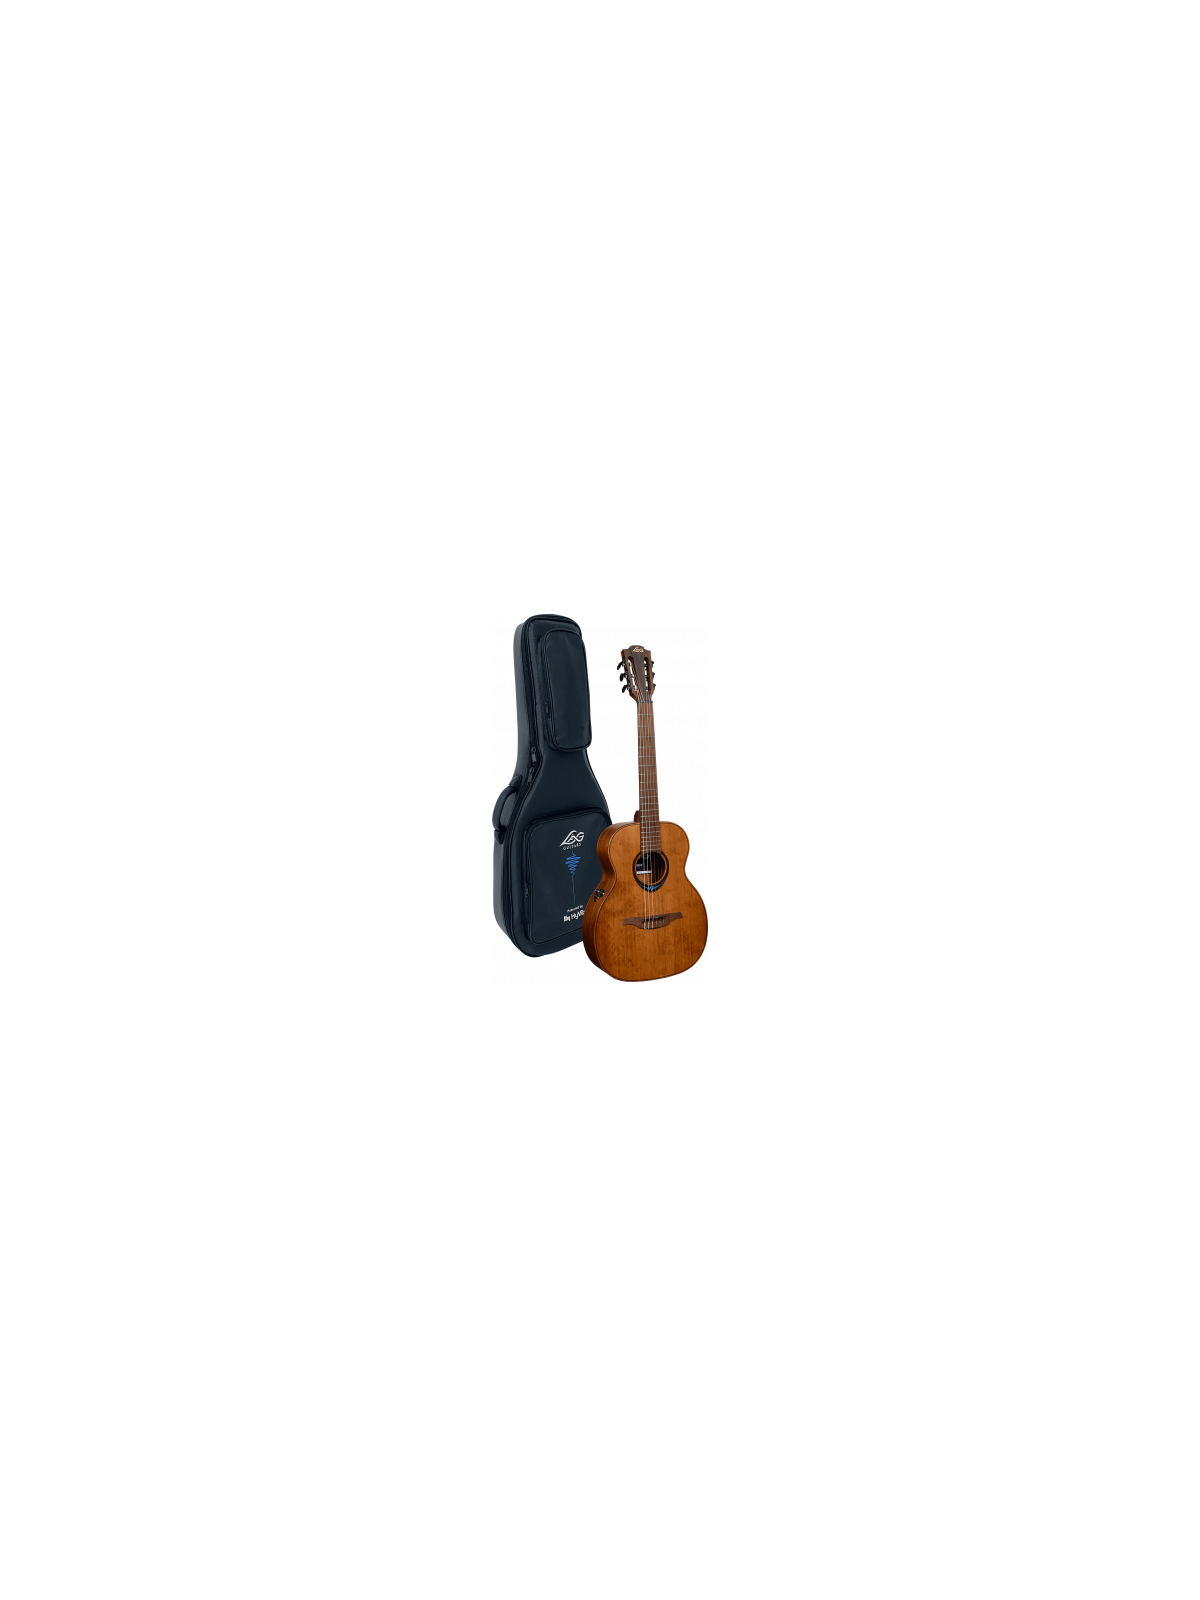 Guitare Electro-Classique Lag - TNBW1TE-BRW
BlueWave 1 Smart Guitar Nylon Travel Brown